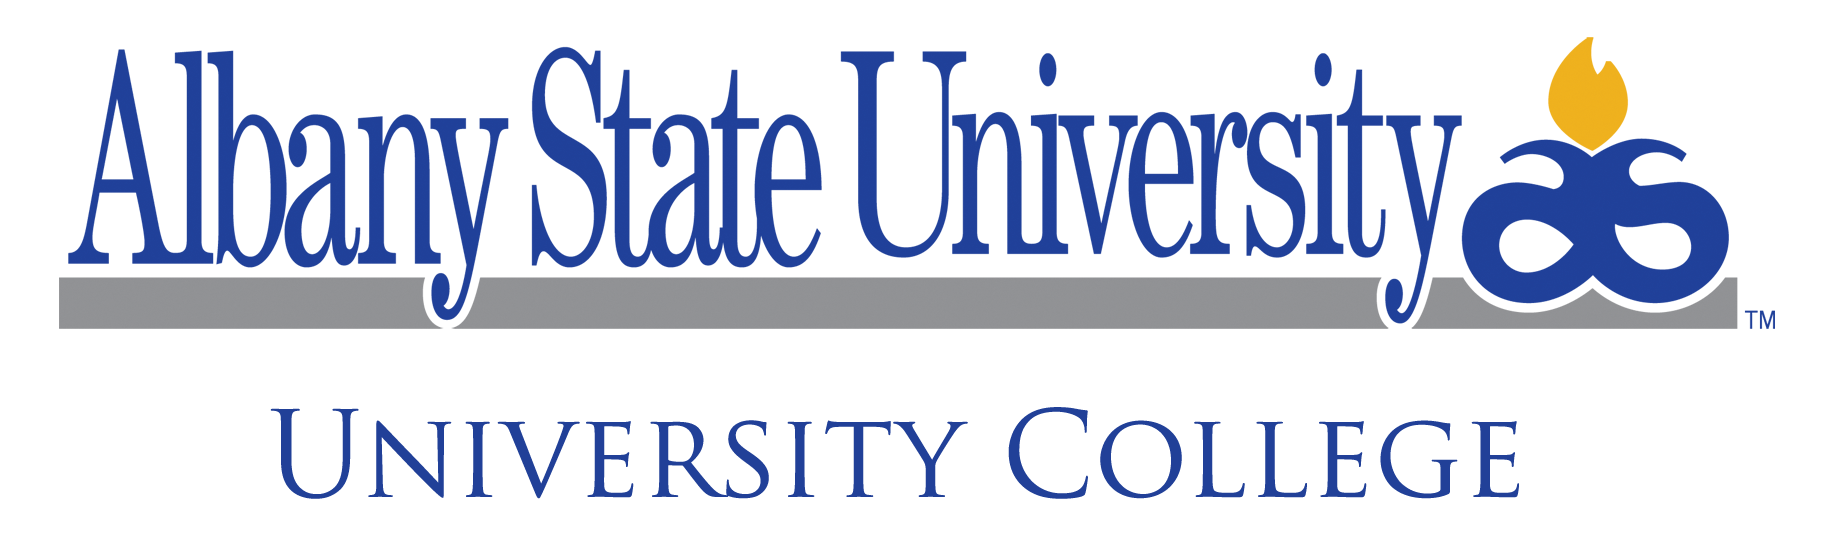 University College at Albany State University